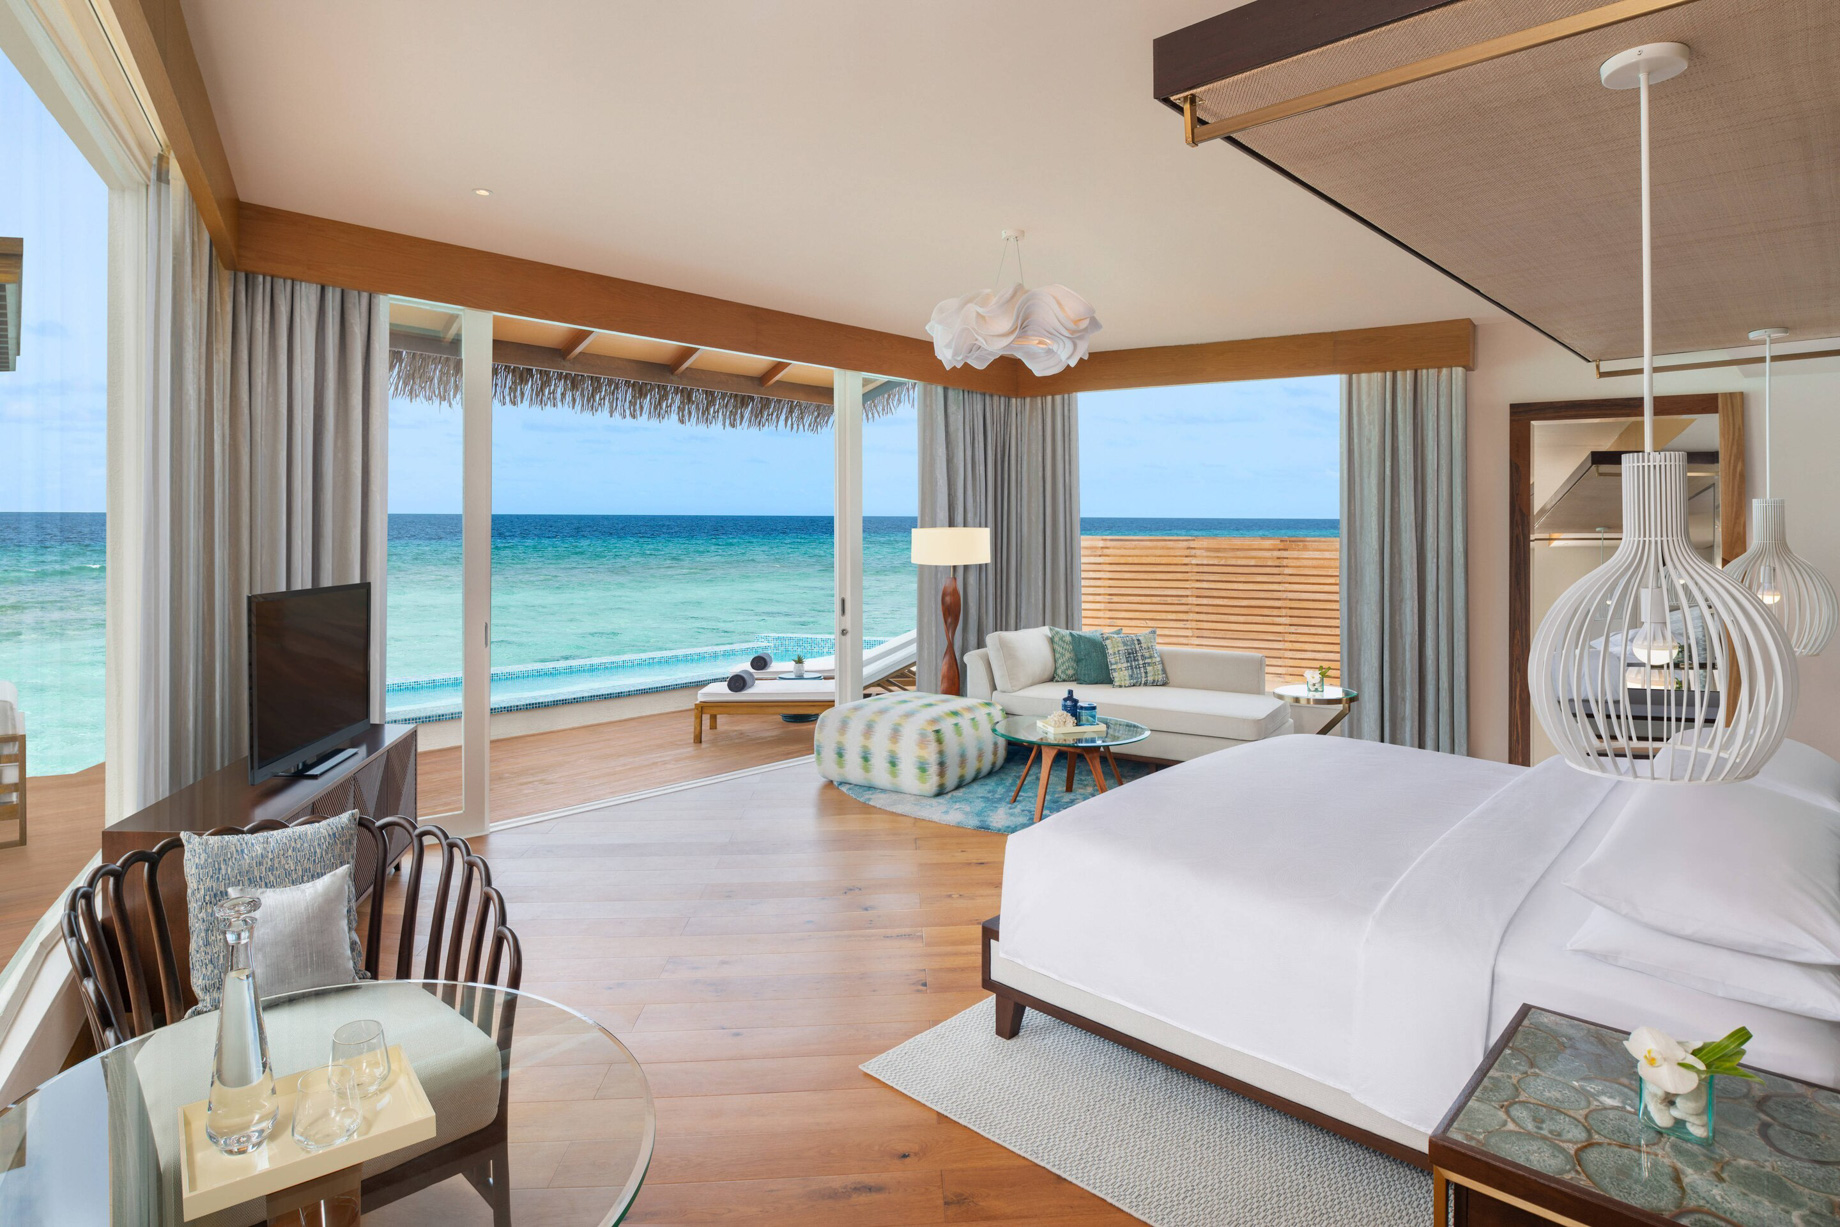 JW Marriott Maldives Resort & Spa – Shaviyani Atoll, Maldives – Duplex Overwater Pool Villa Bedroom Ocean View